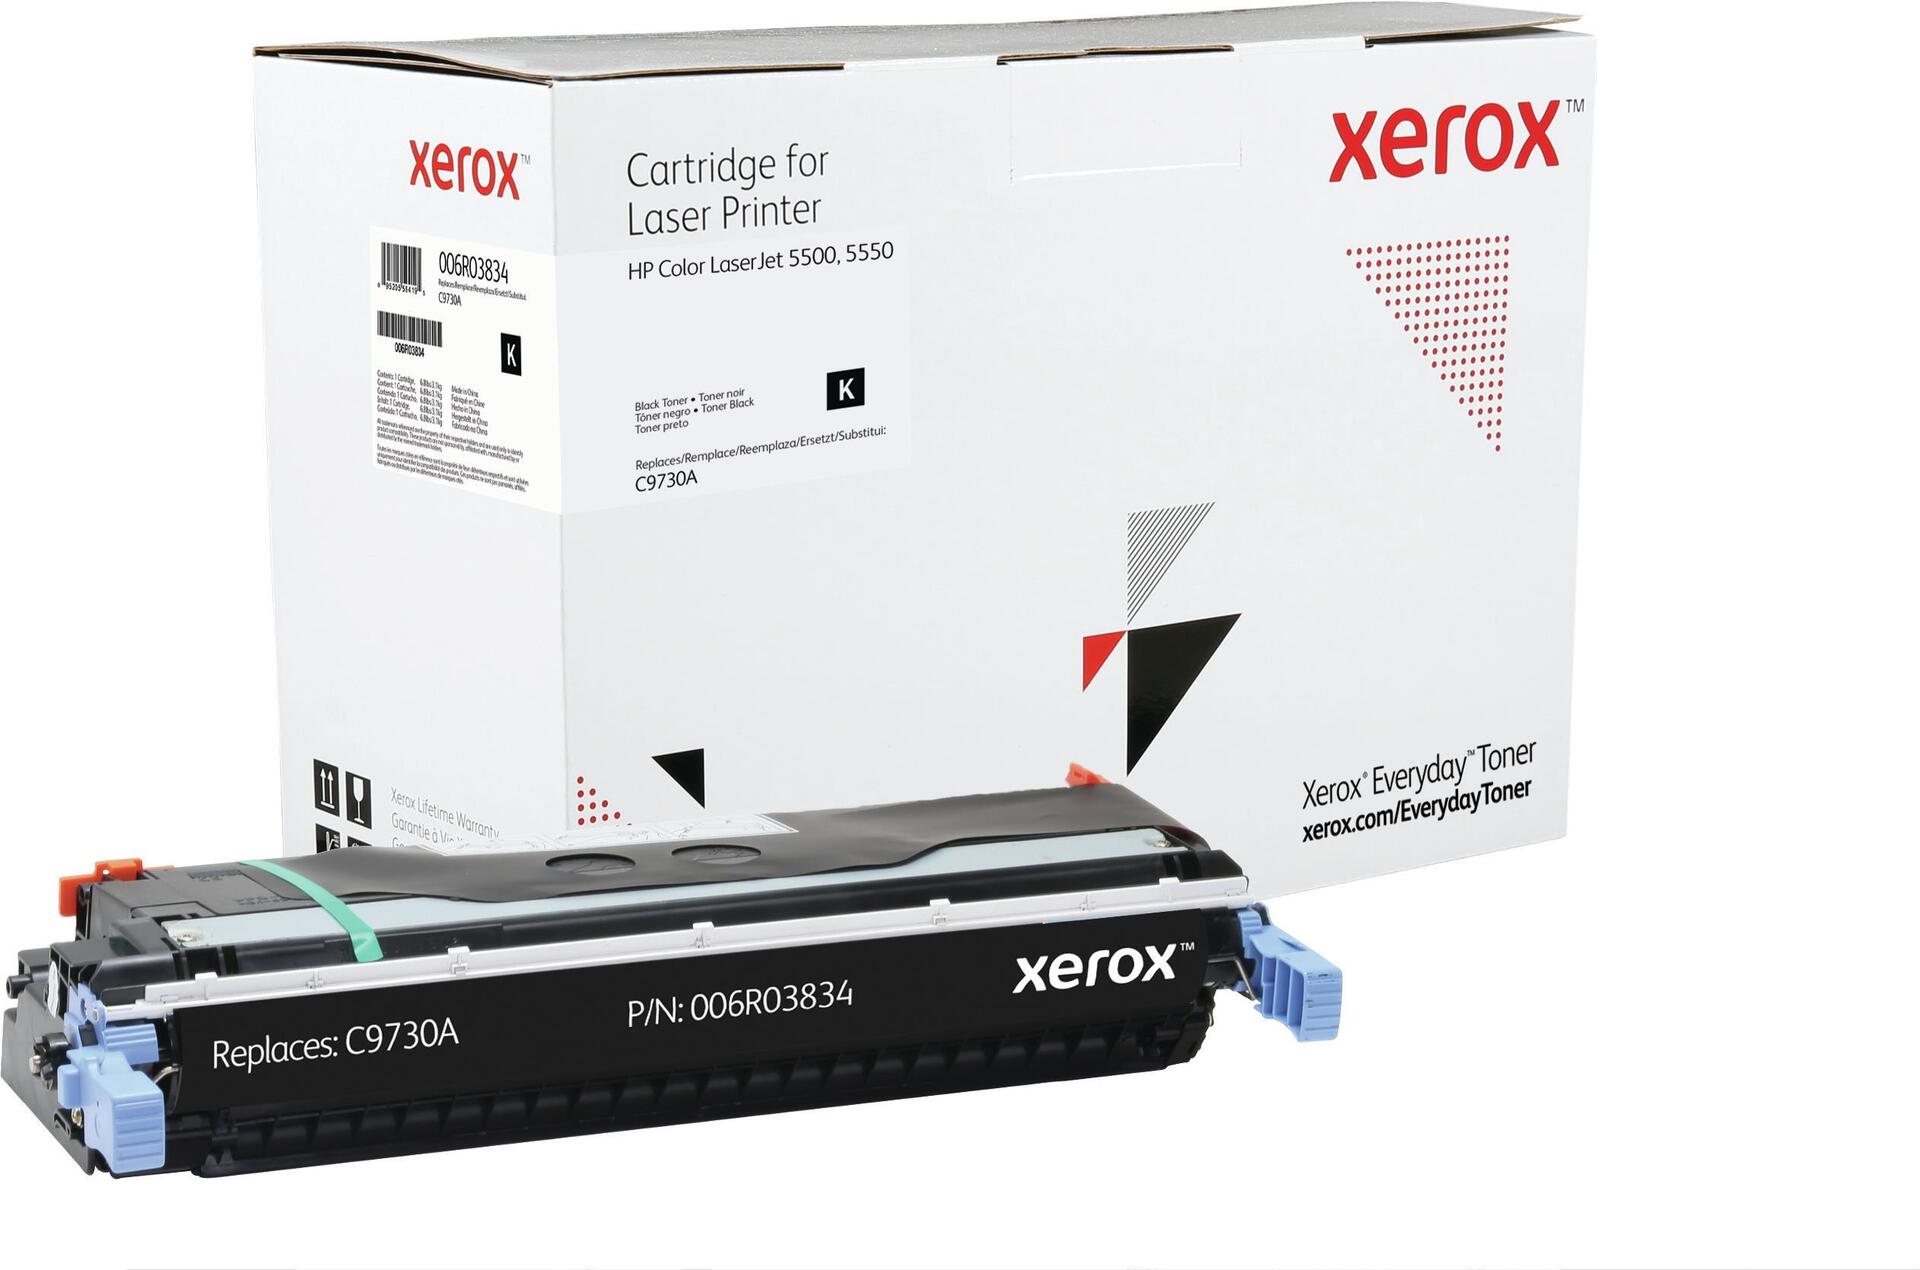 XEROX Everyday - Toner Schwarz - ersetzt HP 645A für HP Color LaserJet 5500, 5550